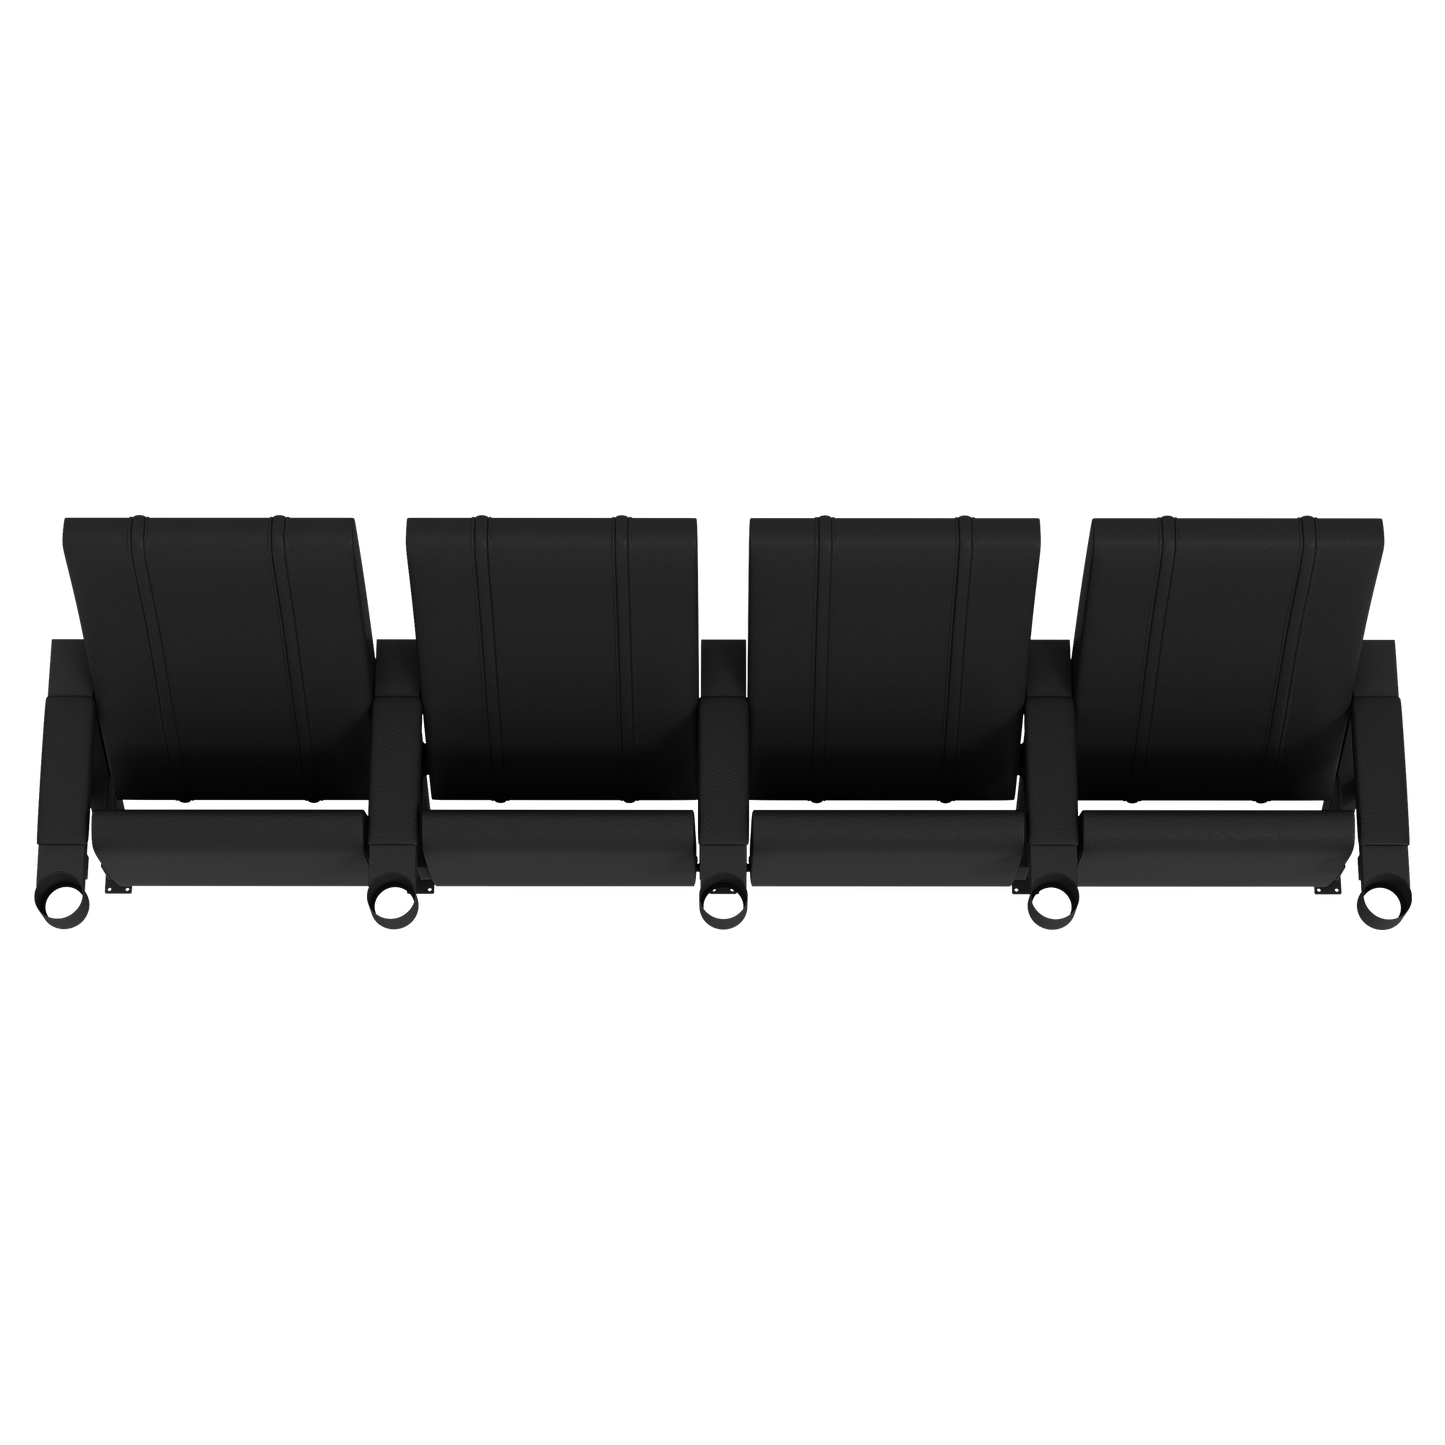 SuiteMax 3.5 VIP Seats with Carolina Hurricanes Logo